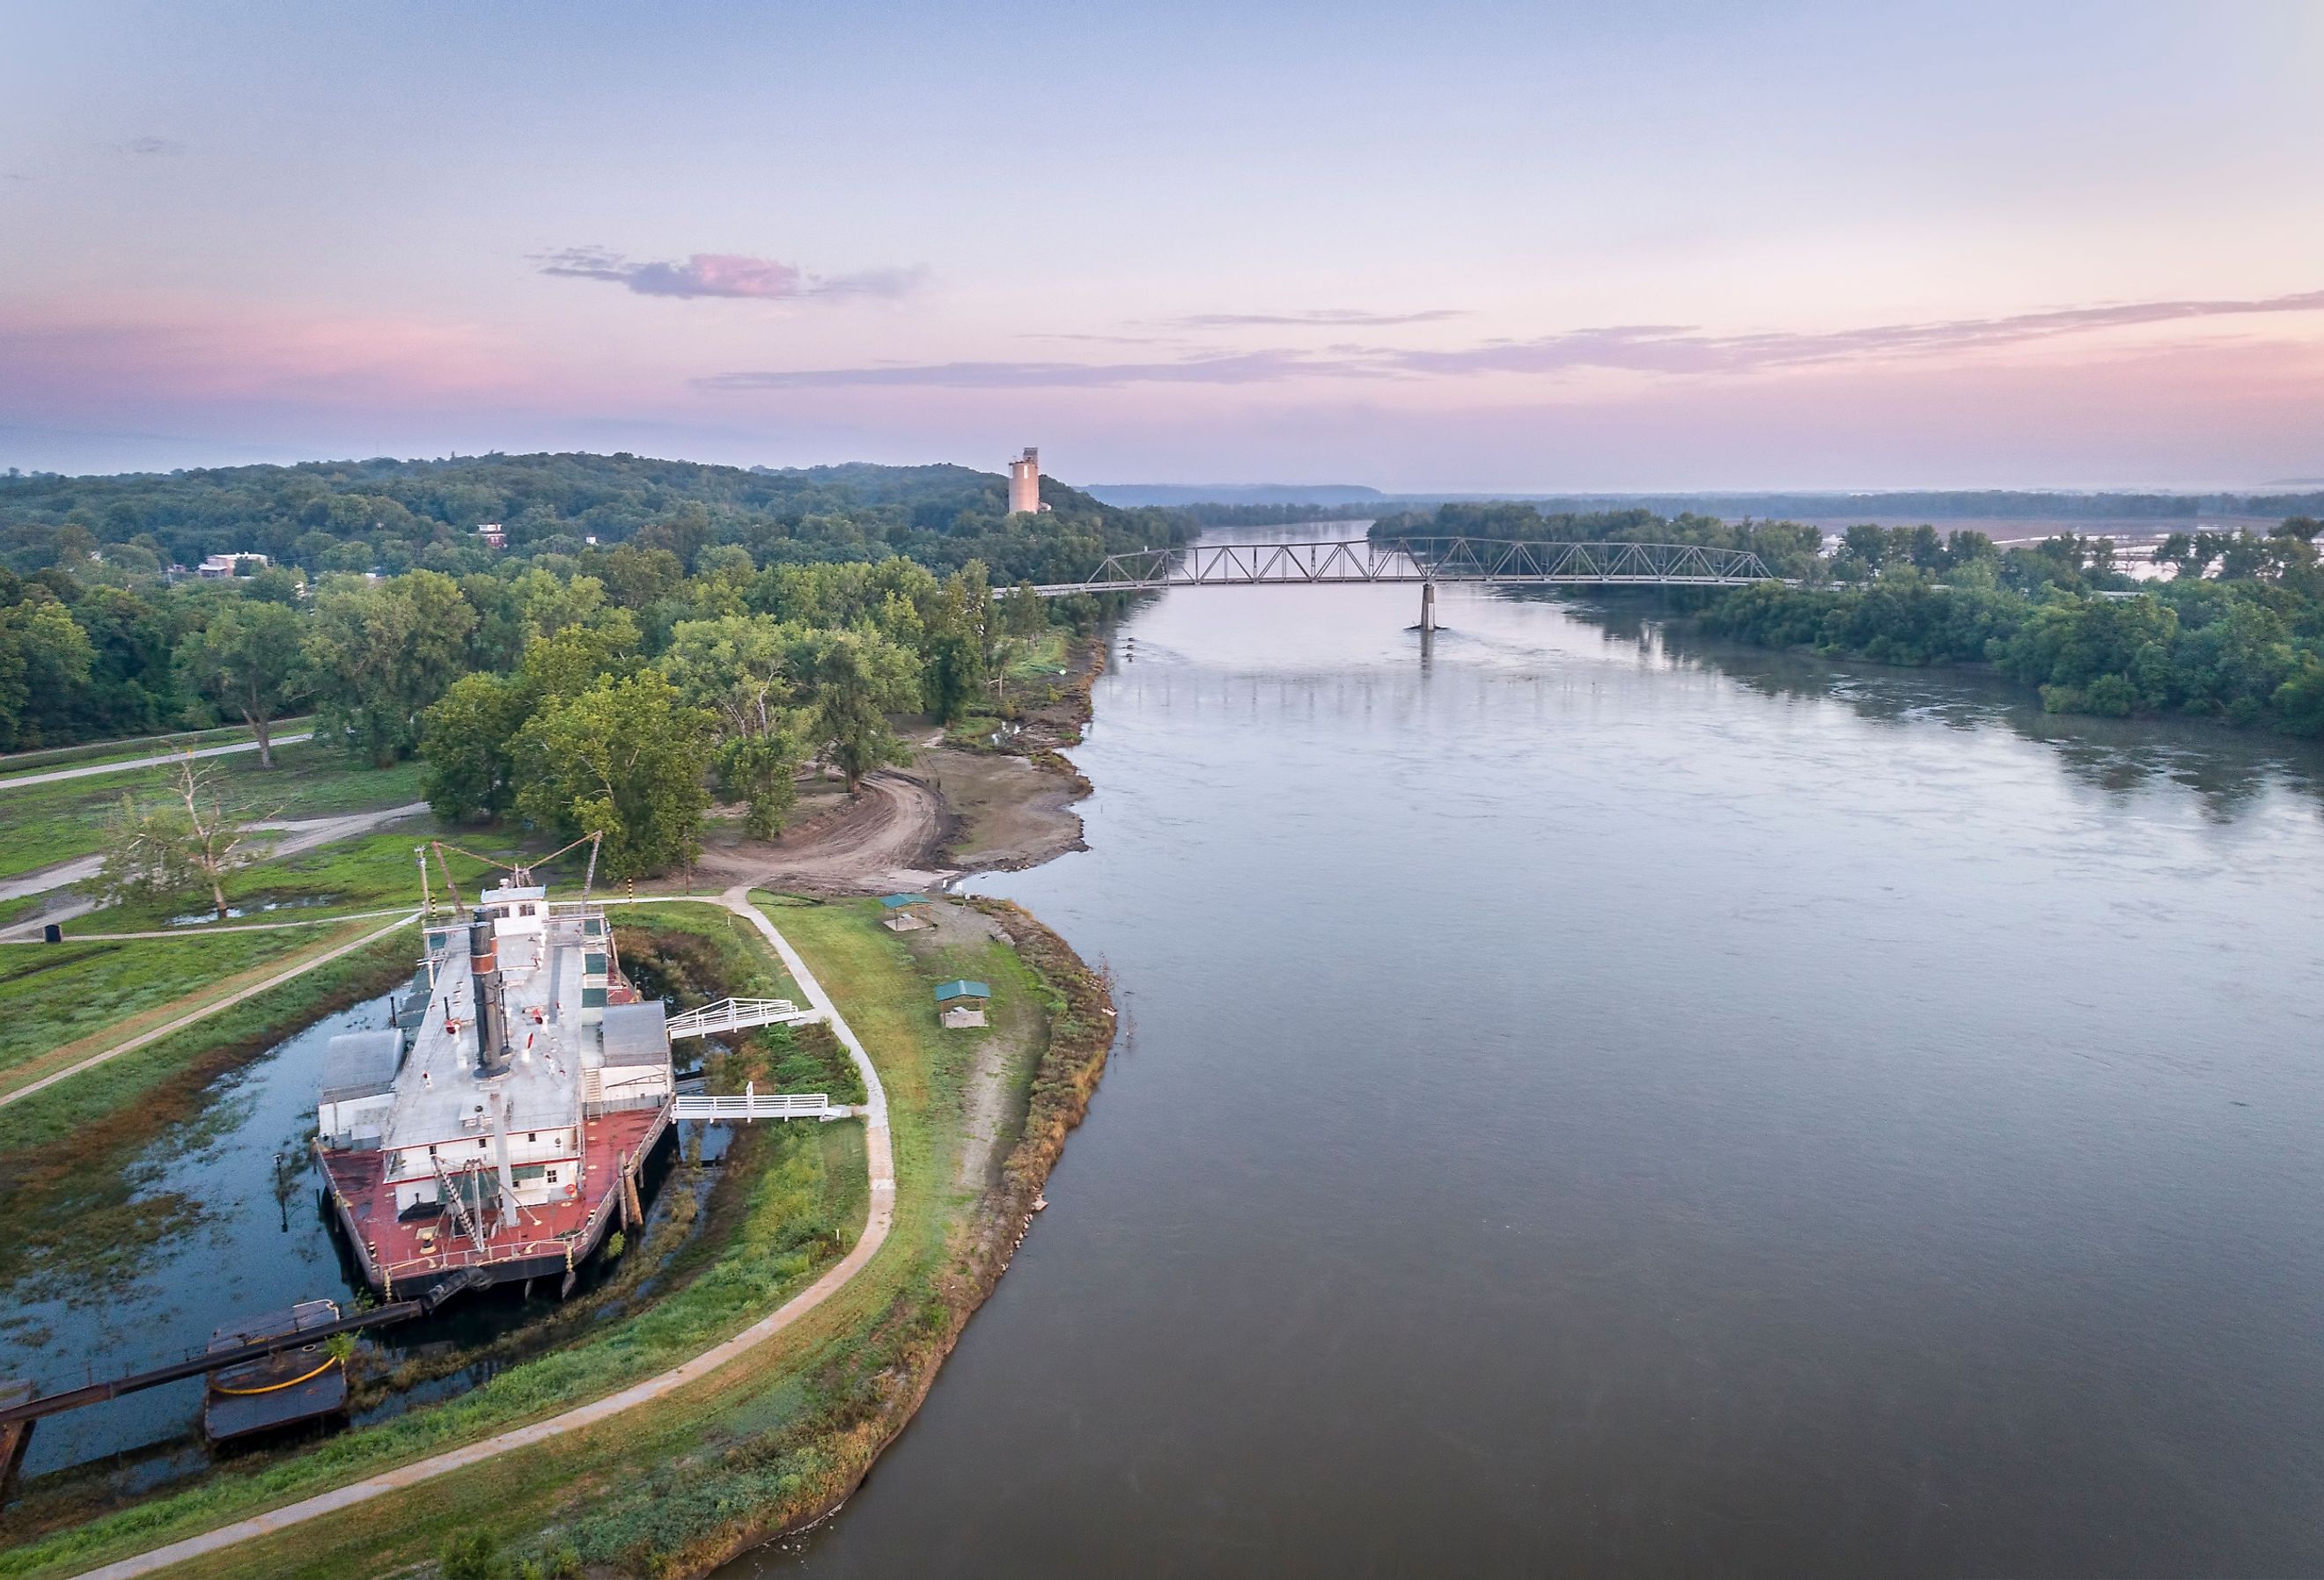 Dawn over the Missouri River at Brownville, Nebraska. Image credit marekuliasz via Shutterstock.